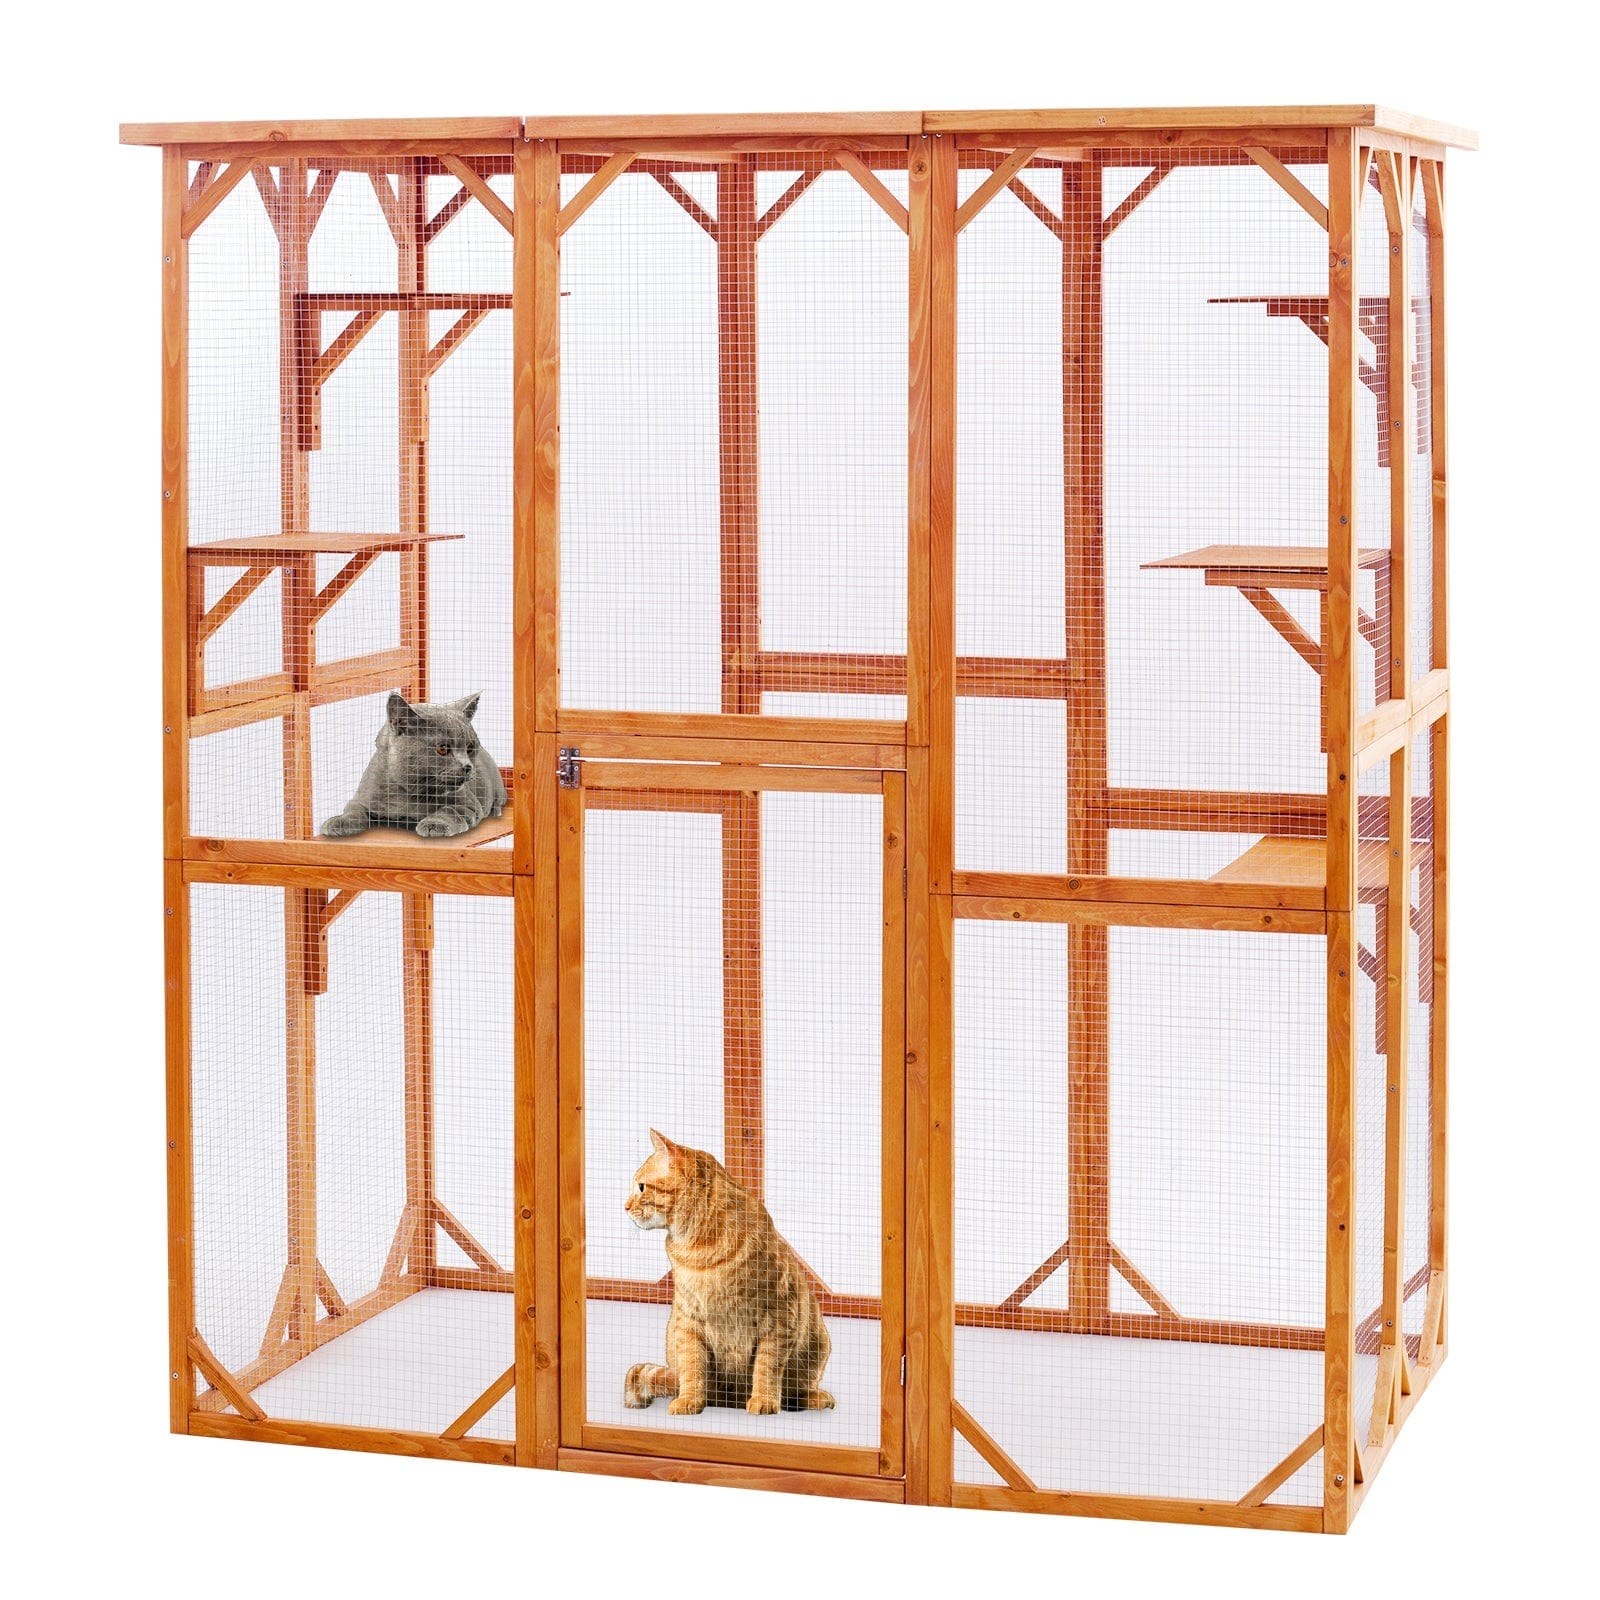 Elecwish Large Cat House Catio Outdoor Cat Enclosure 71" x 38.5" x 71",Orange with white background